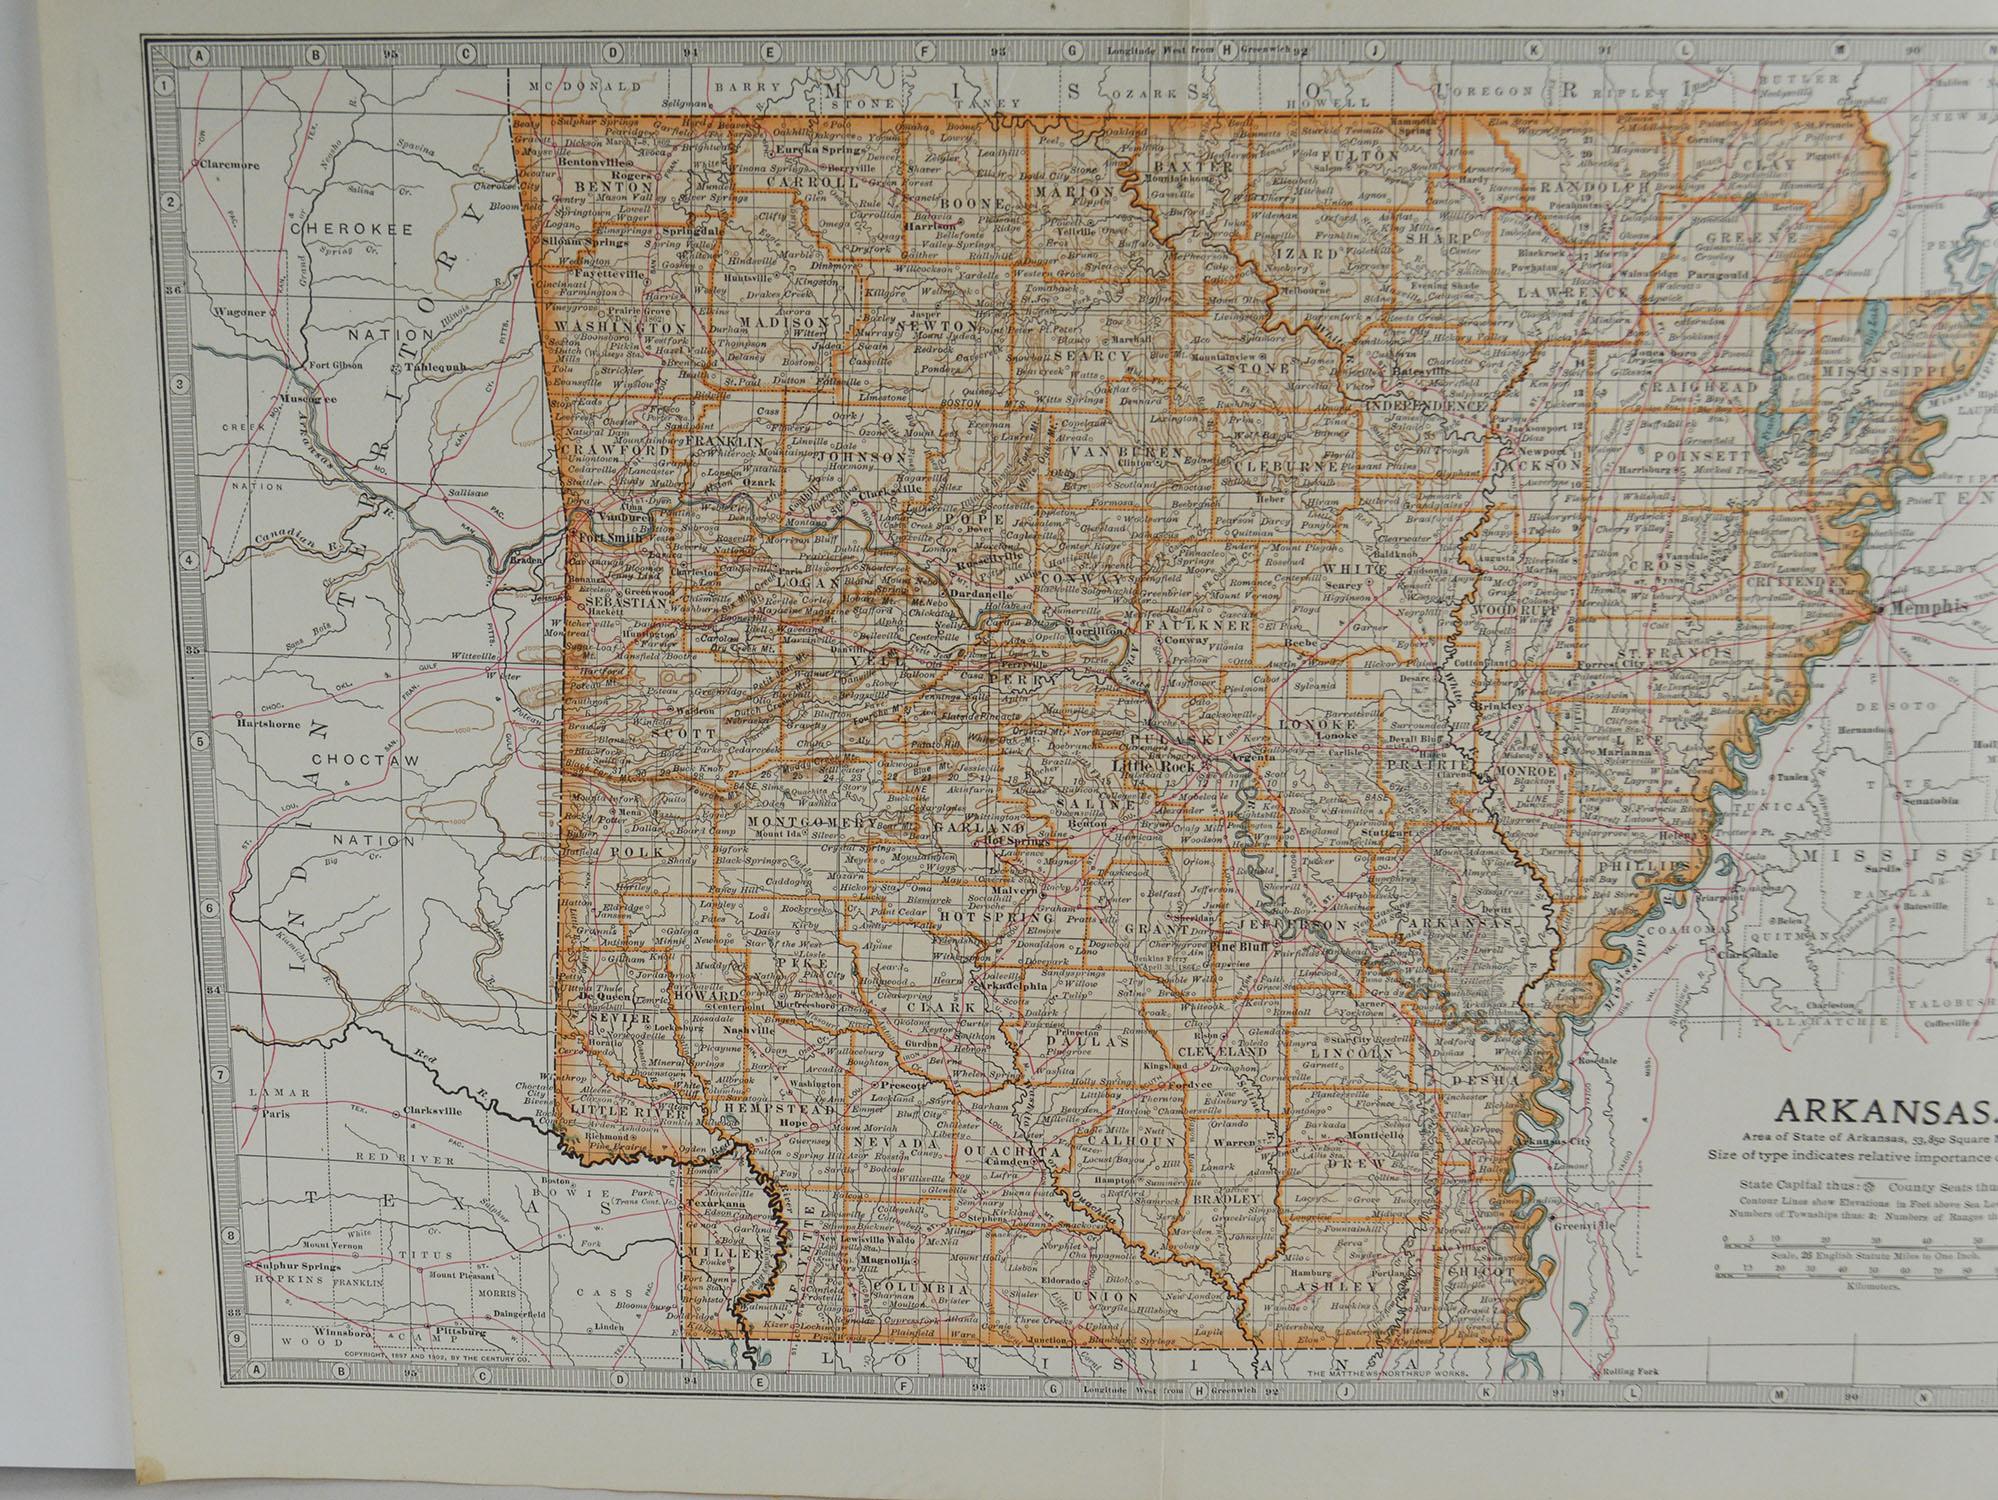 Other Original Antique Map of Arkansas, circa 1890